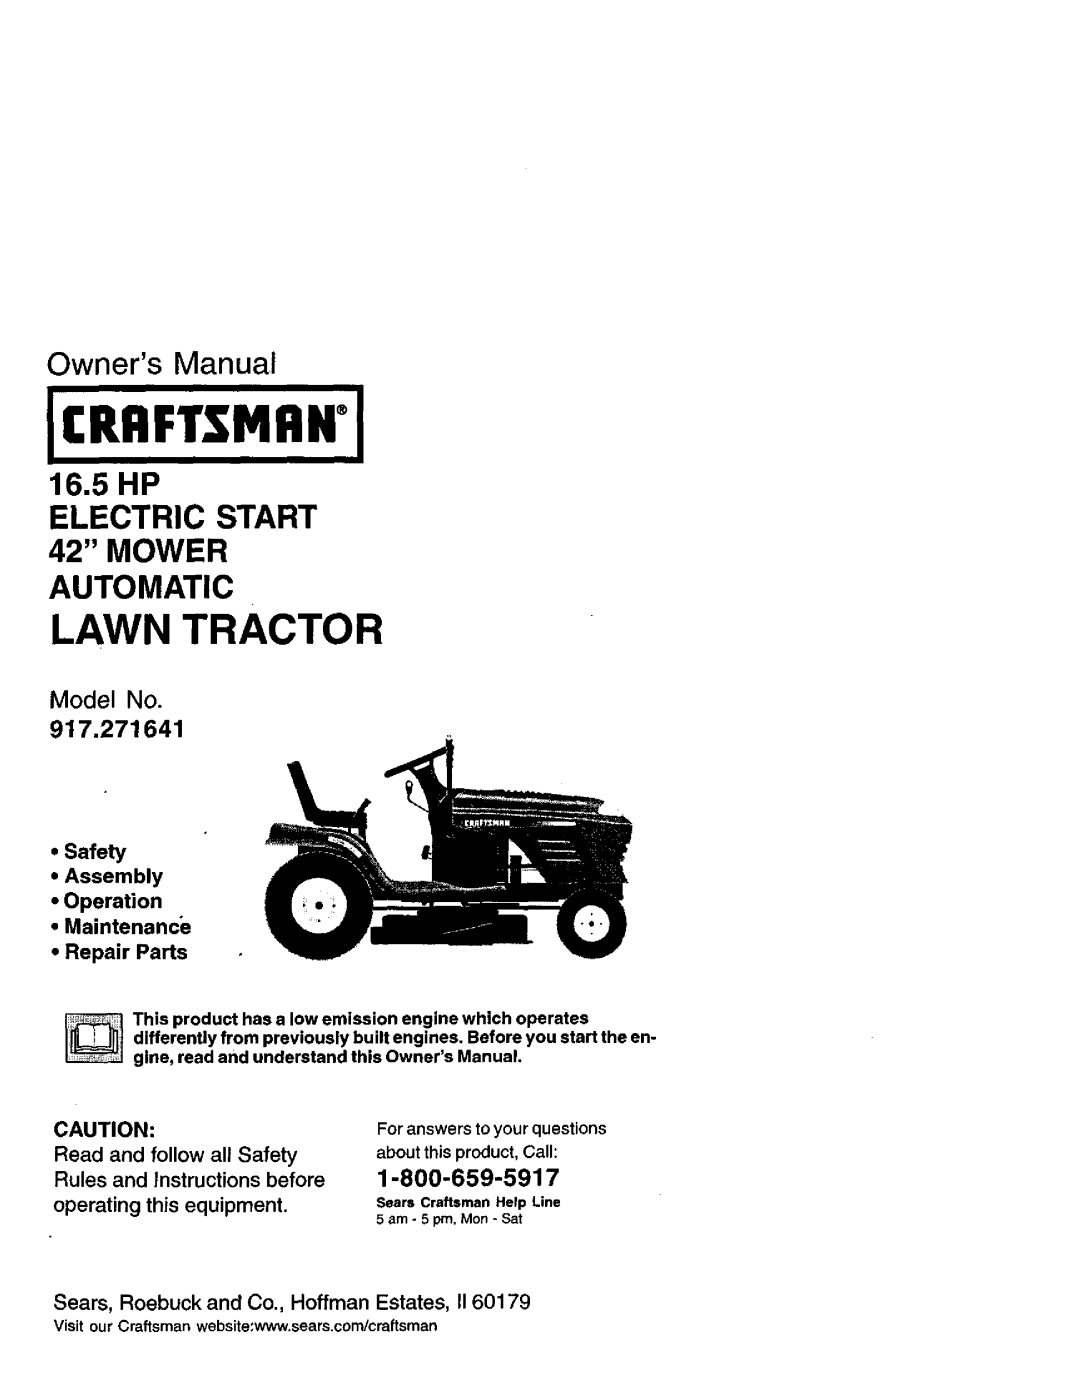 Craftsman 917.271641 owner manual ELECTRIC START 42 MOWER AUTOMATIC, 16.5HP, Model No, Repair Parts, ICRnFT MRWI 